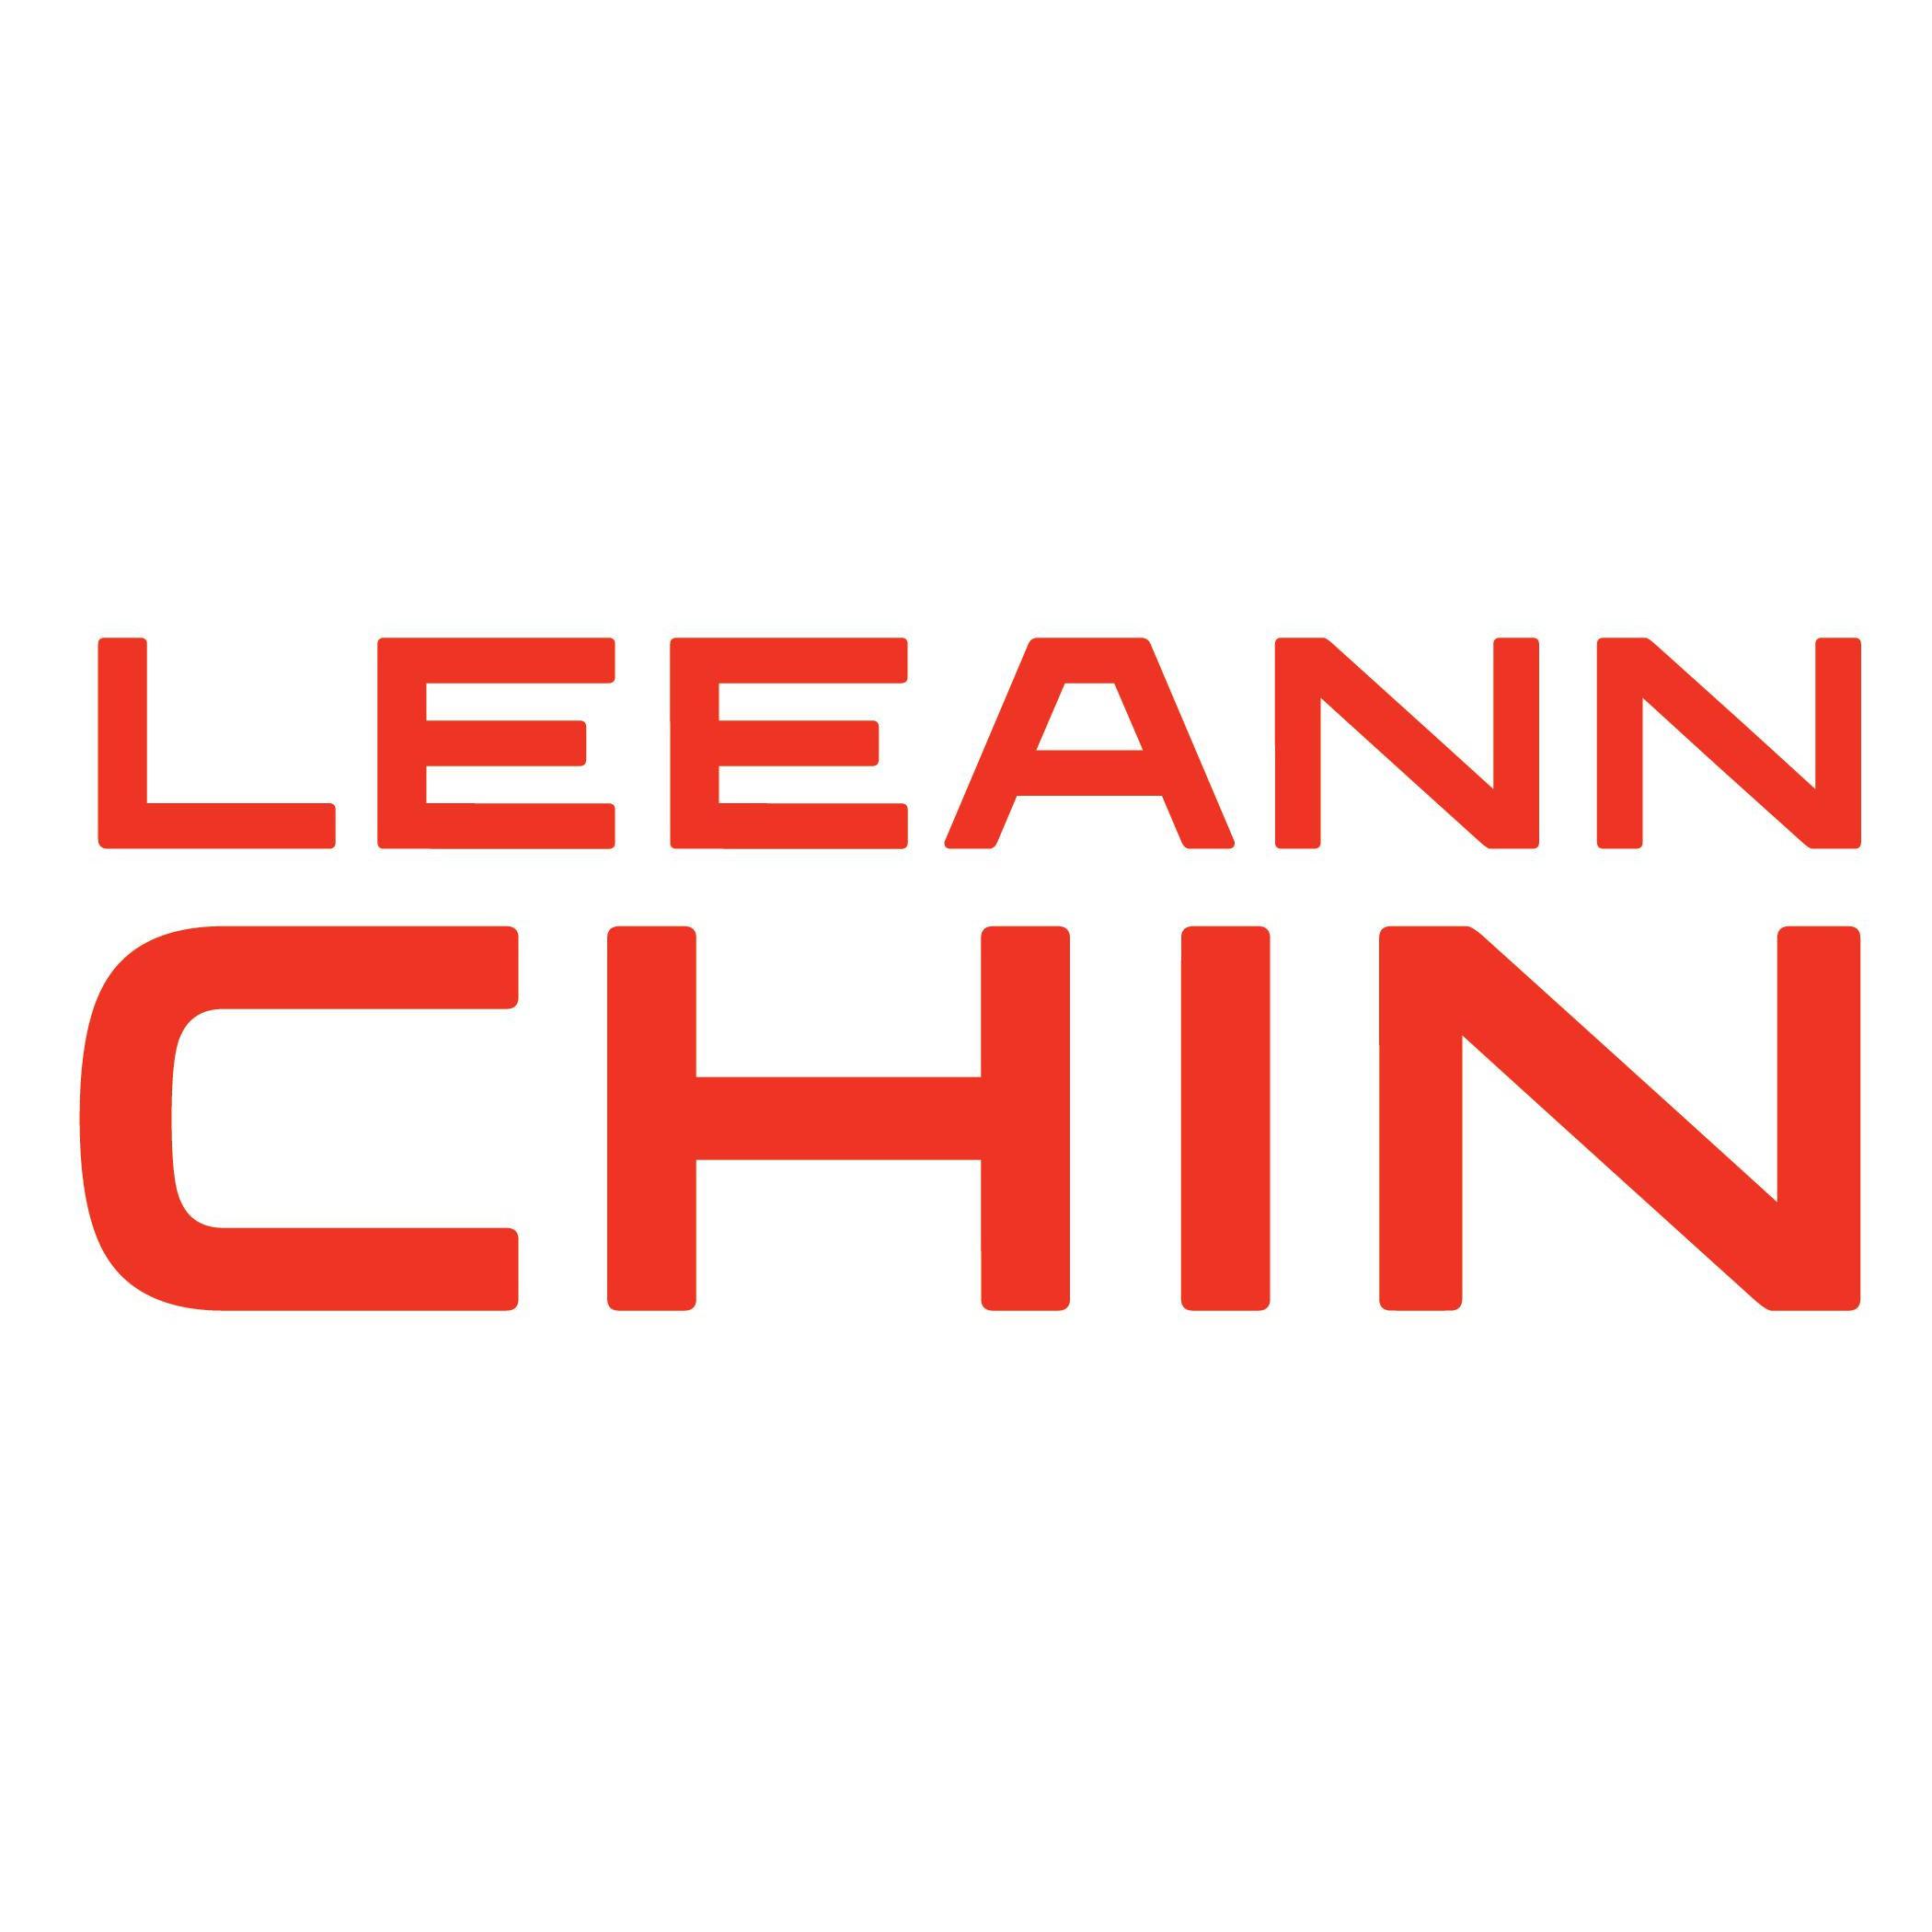 Leeann Chin - Chanhassen, MN 55317 - (952)474-2080 | ShowMeLocal.com